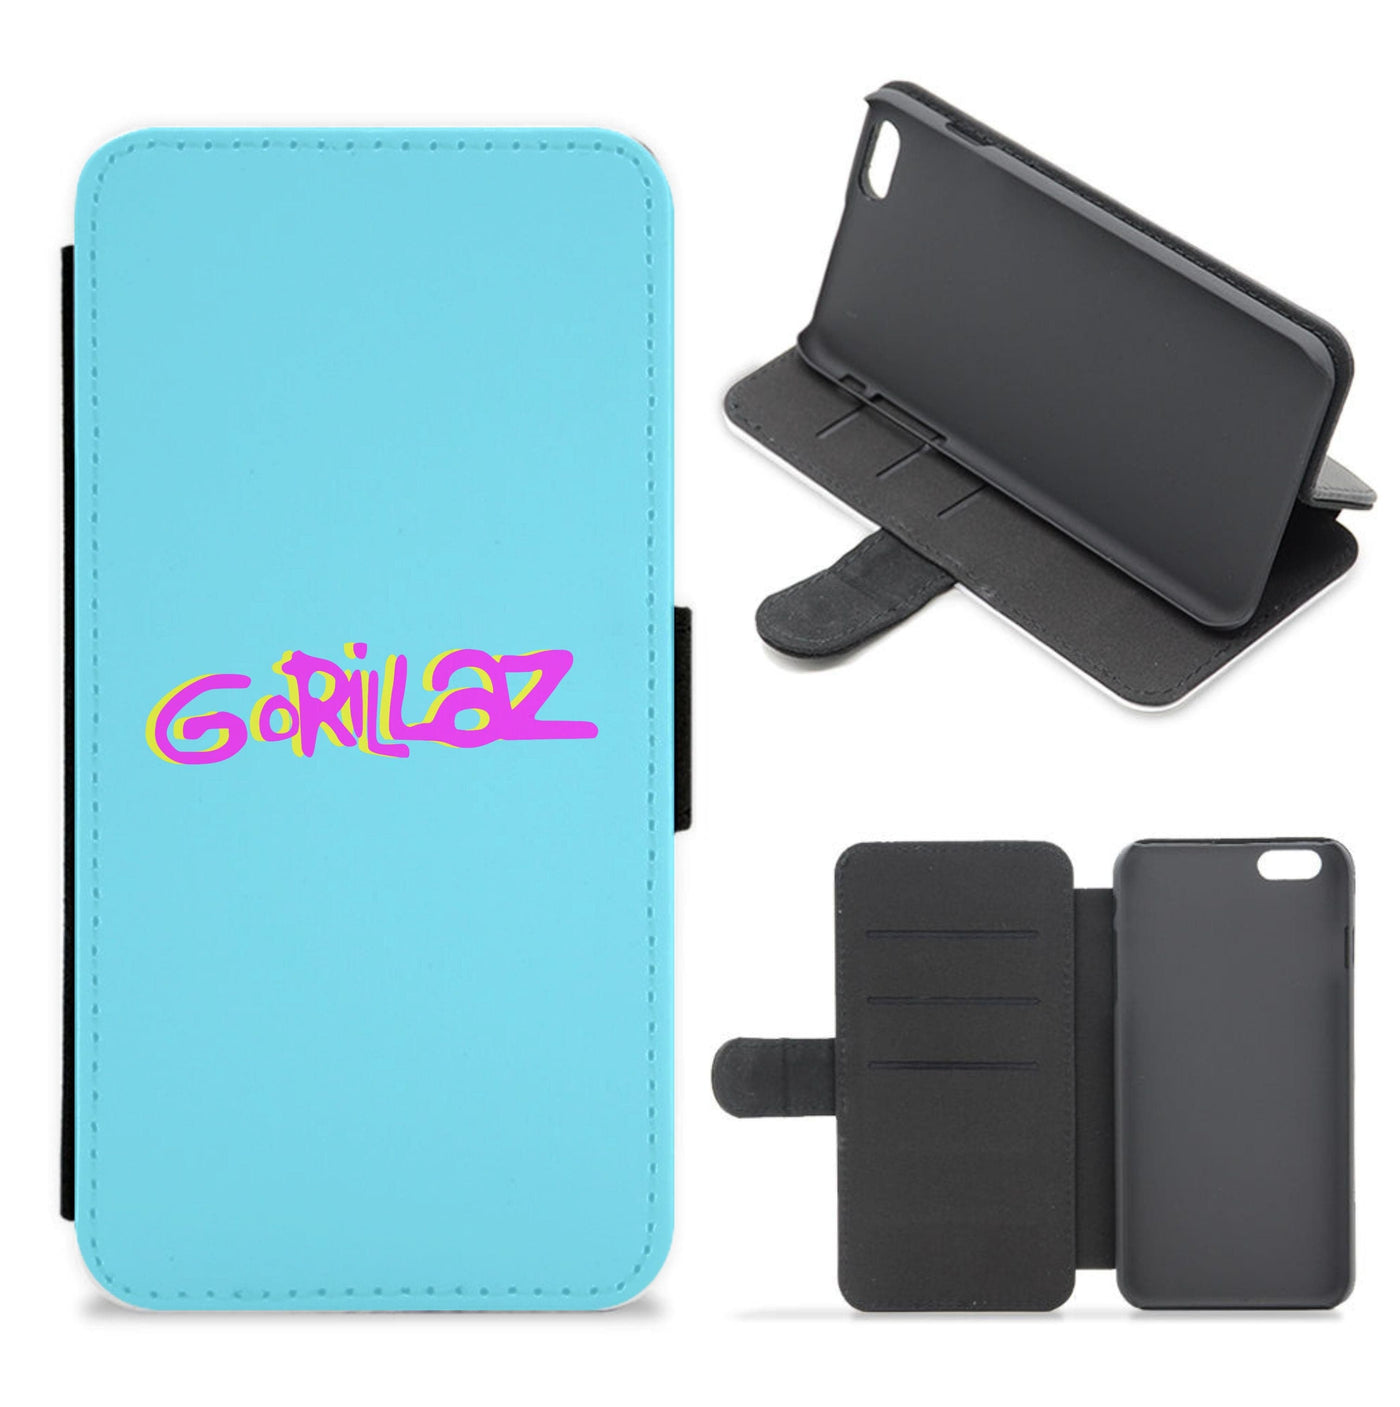 Title - Gorillaz Flip / Wallet Phone Case